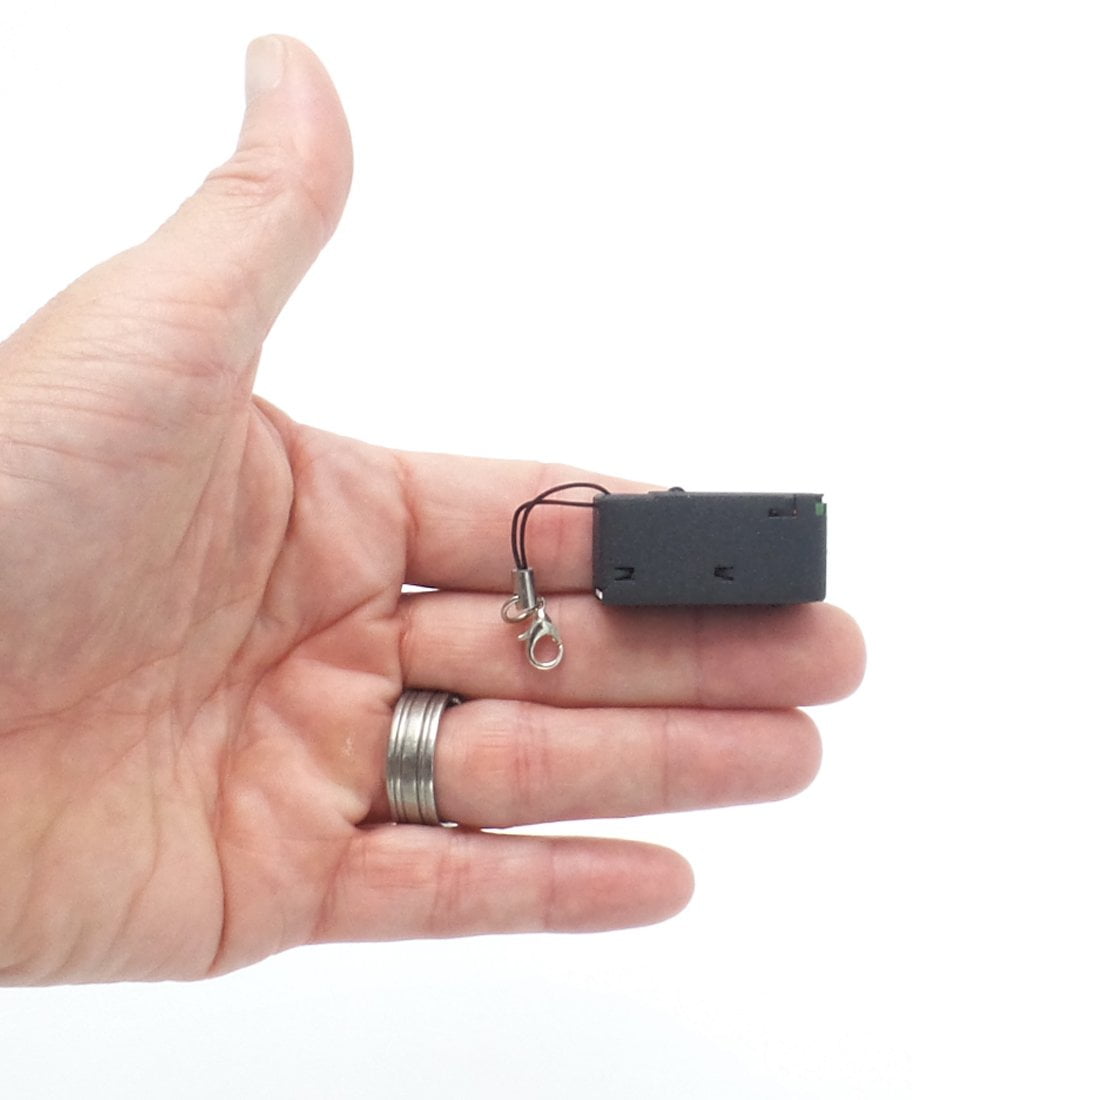 Small voice. World's smallest Voice Recorder. Самый маленький диктофон.